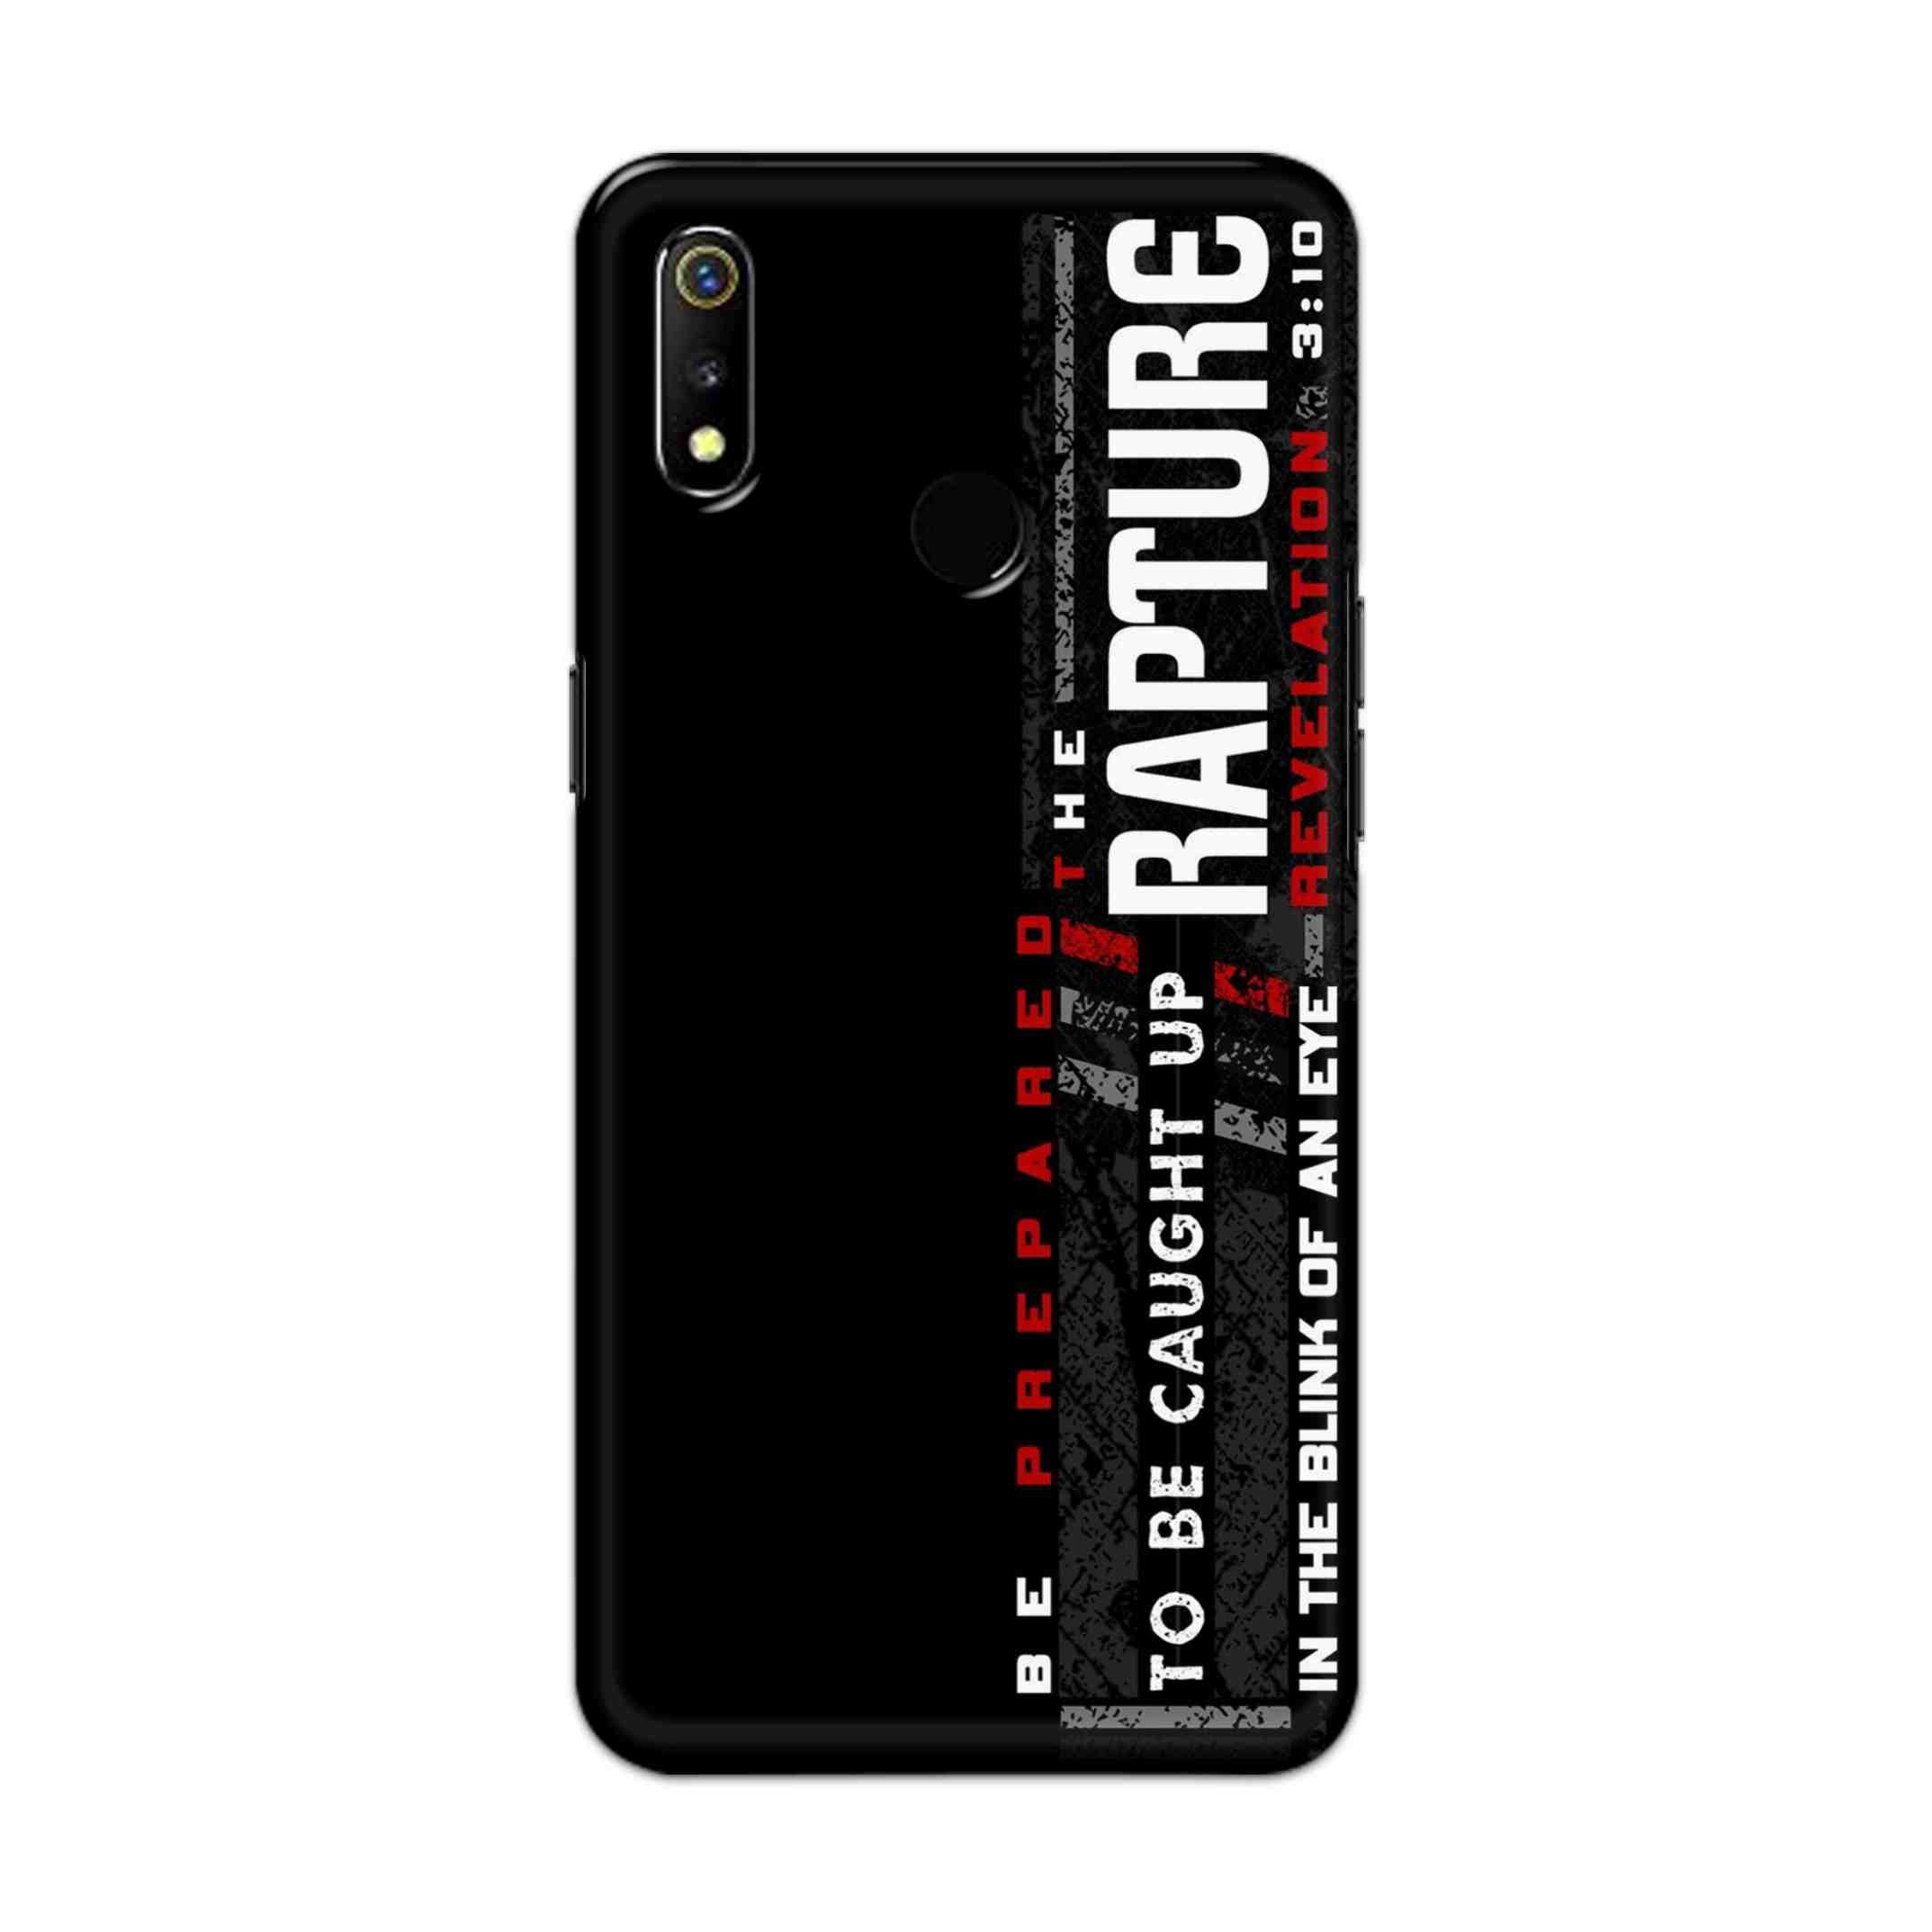 Buy Rapture Hard Back Mobile Phone Case Cover For Oppo Realme 3 Online